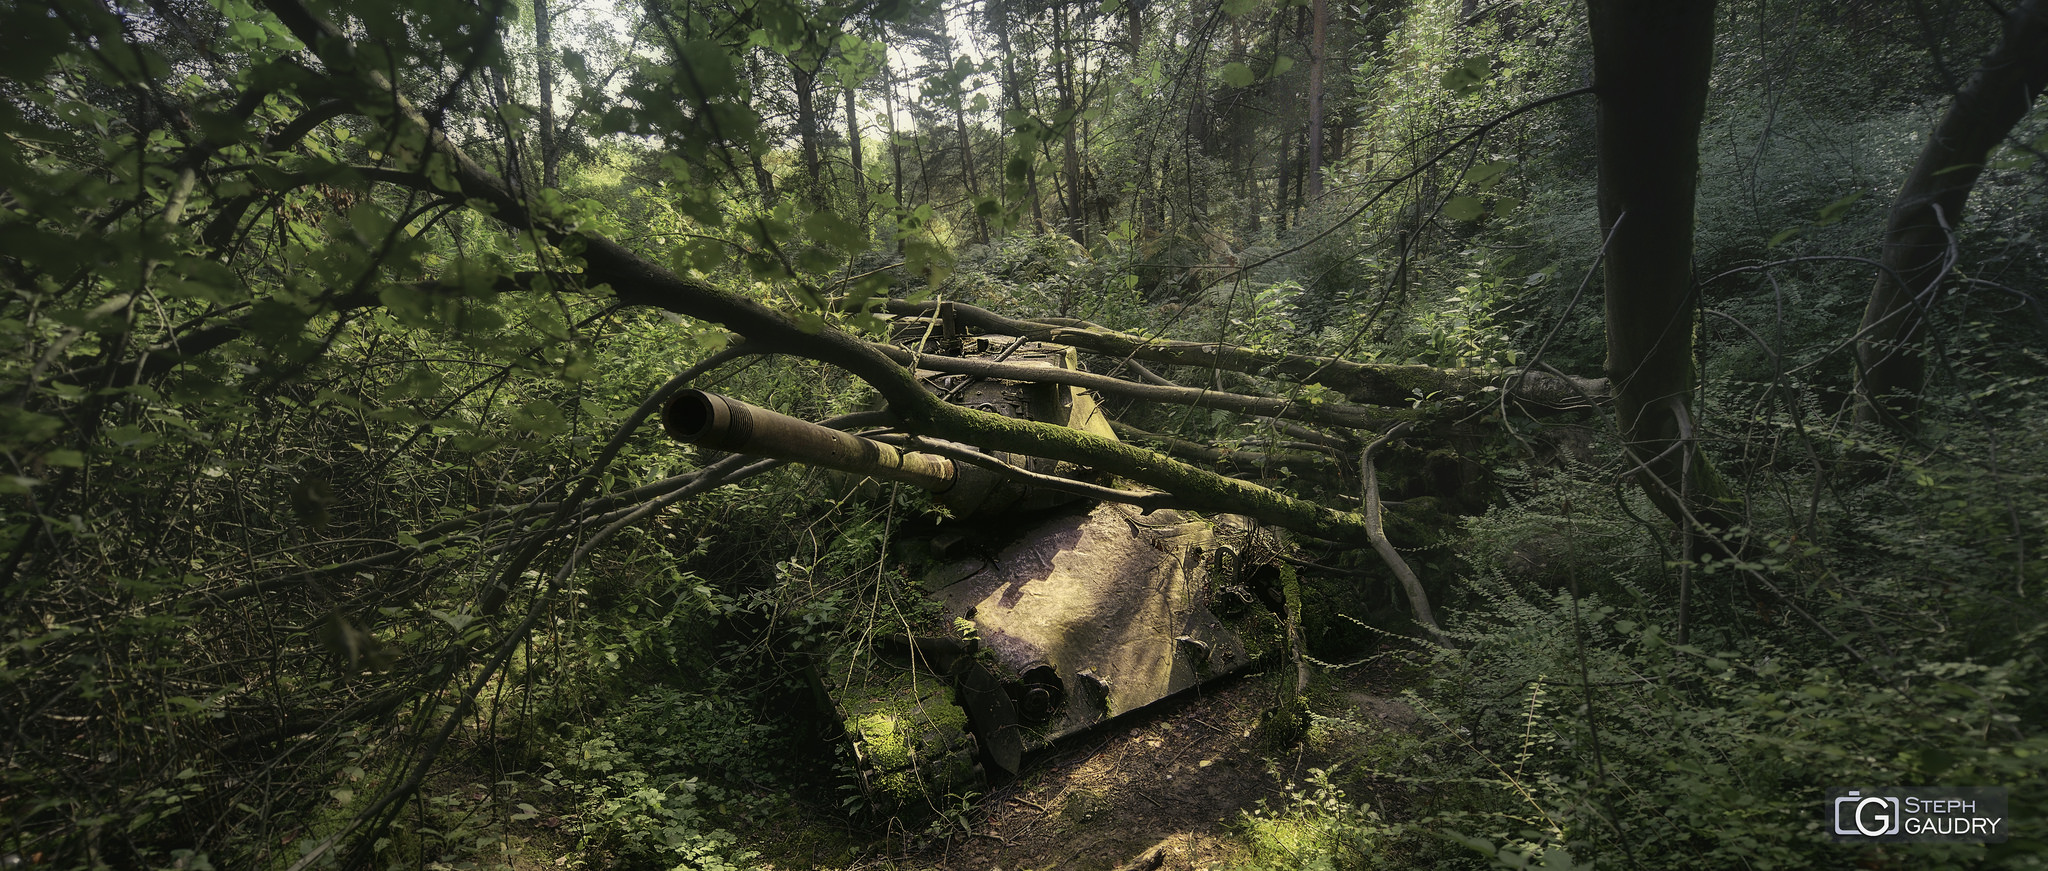 Tank abandonné dans la forêt [Klik om de diavoorstelling te starten]